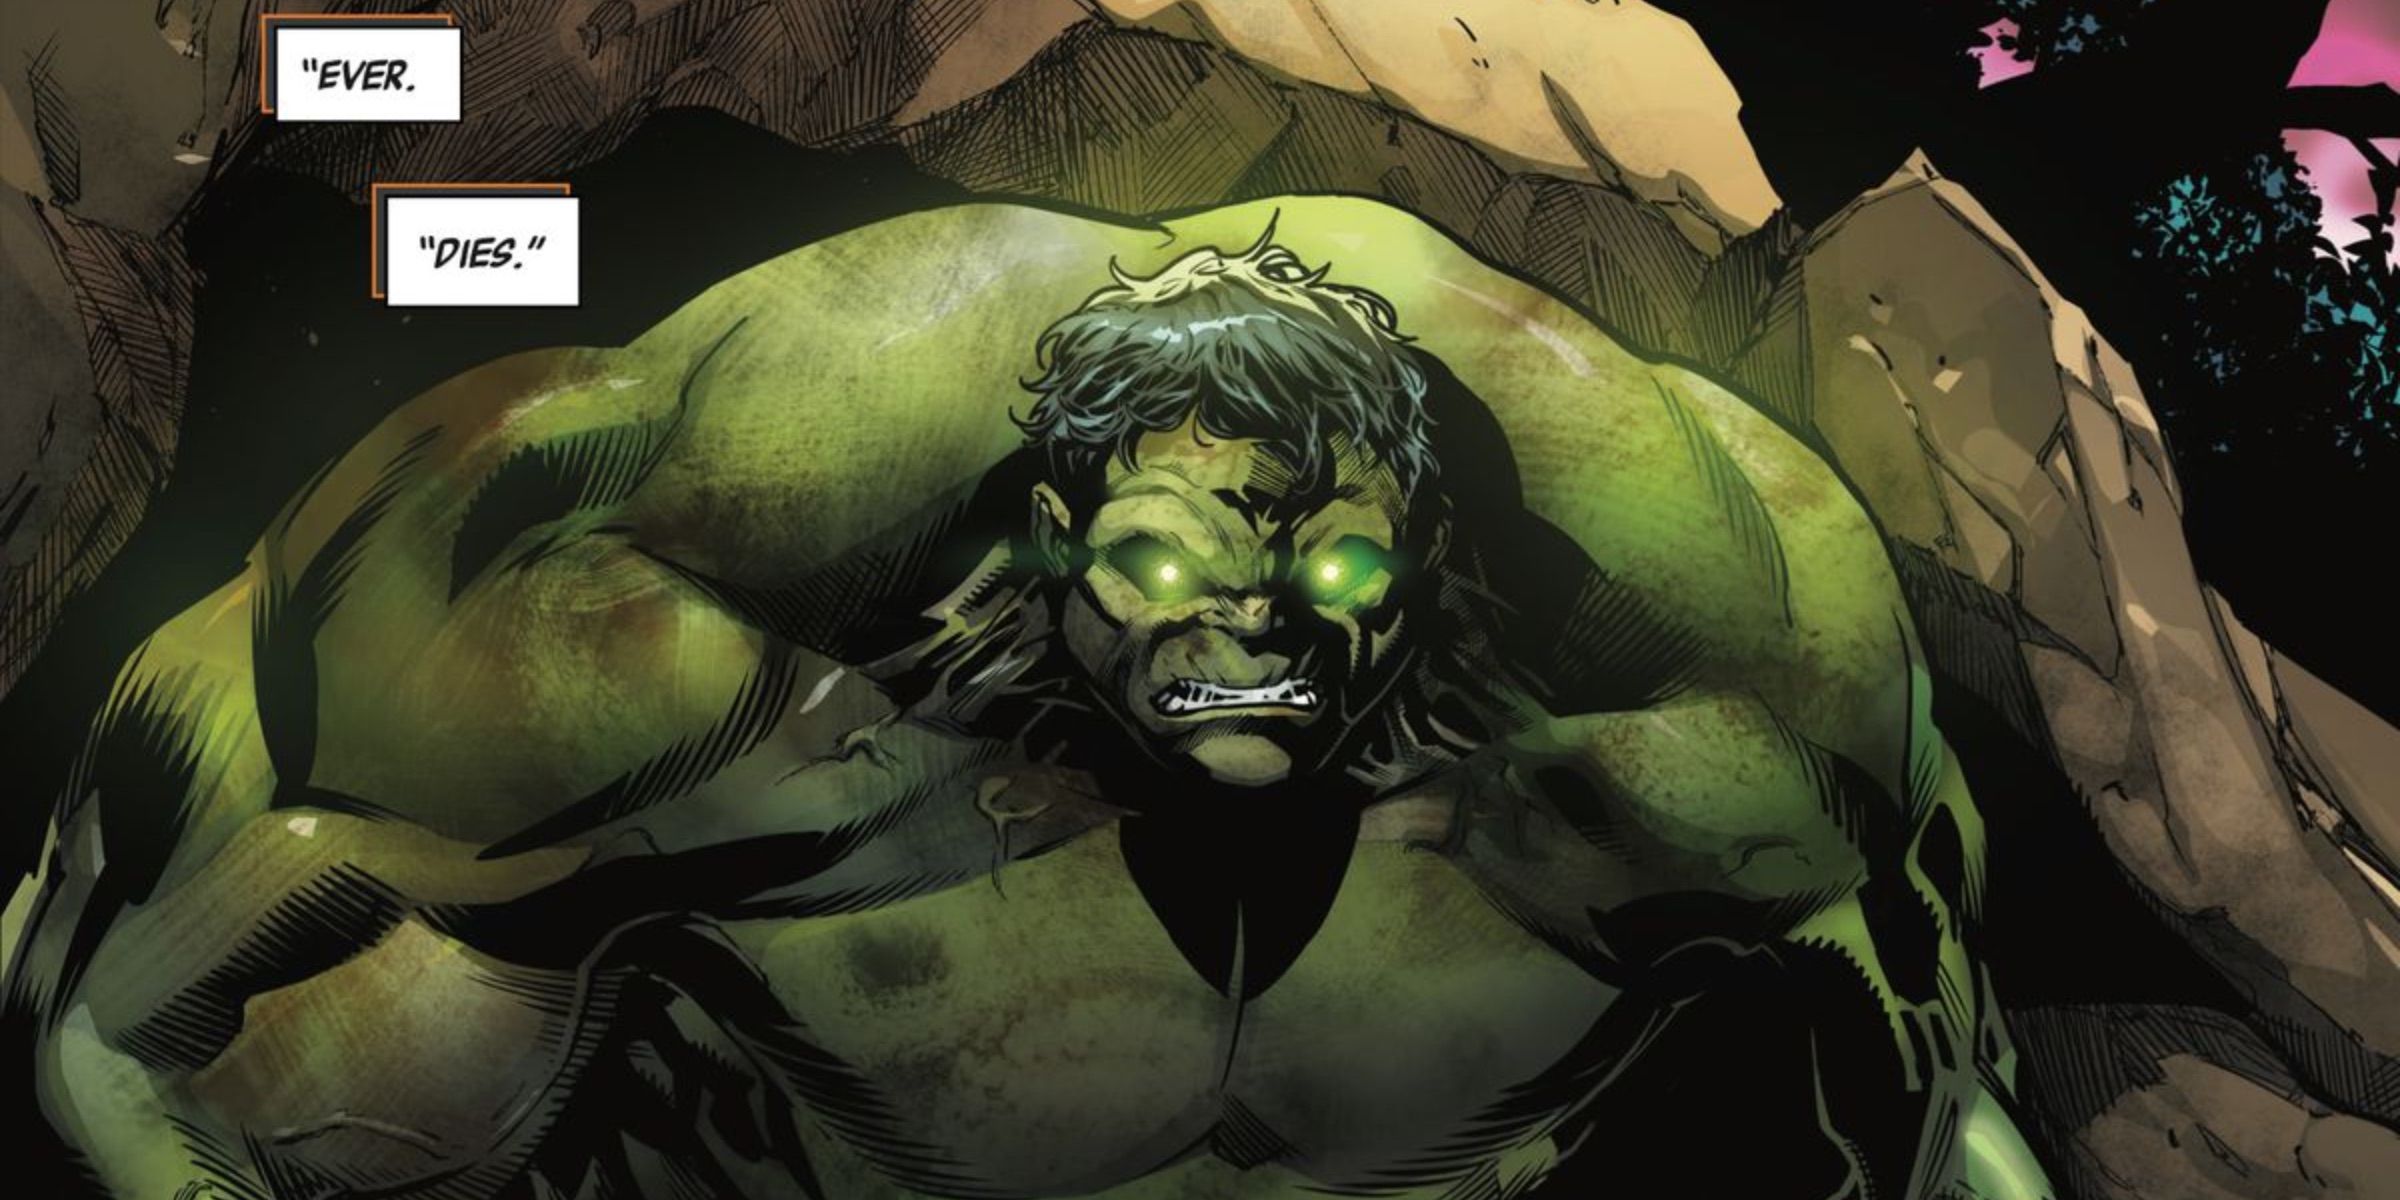 The Hulk Comic Panel Distressed